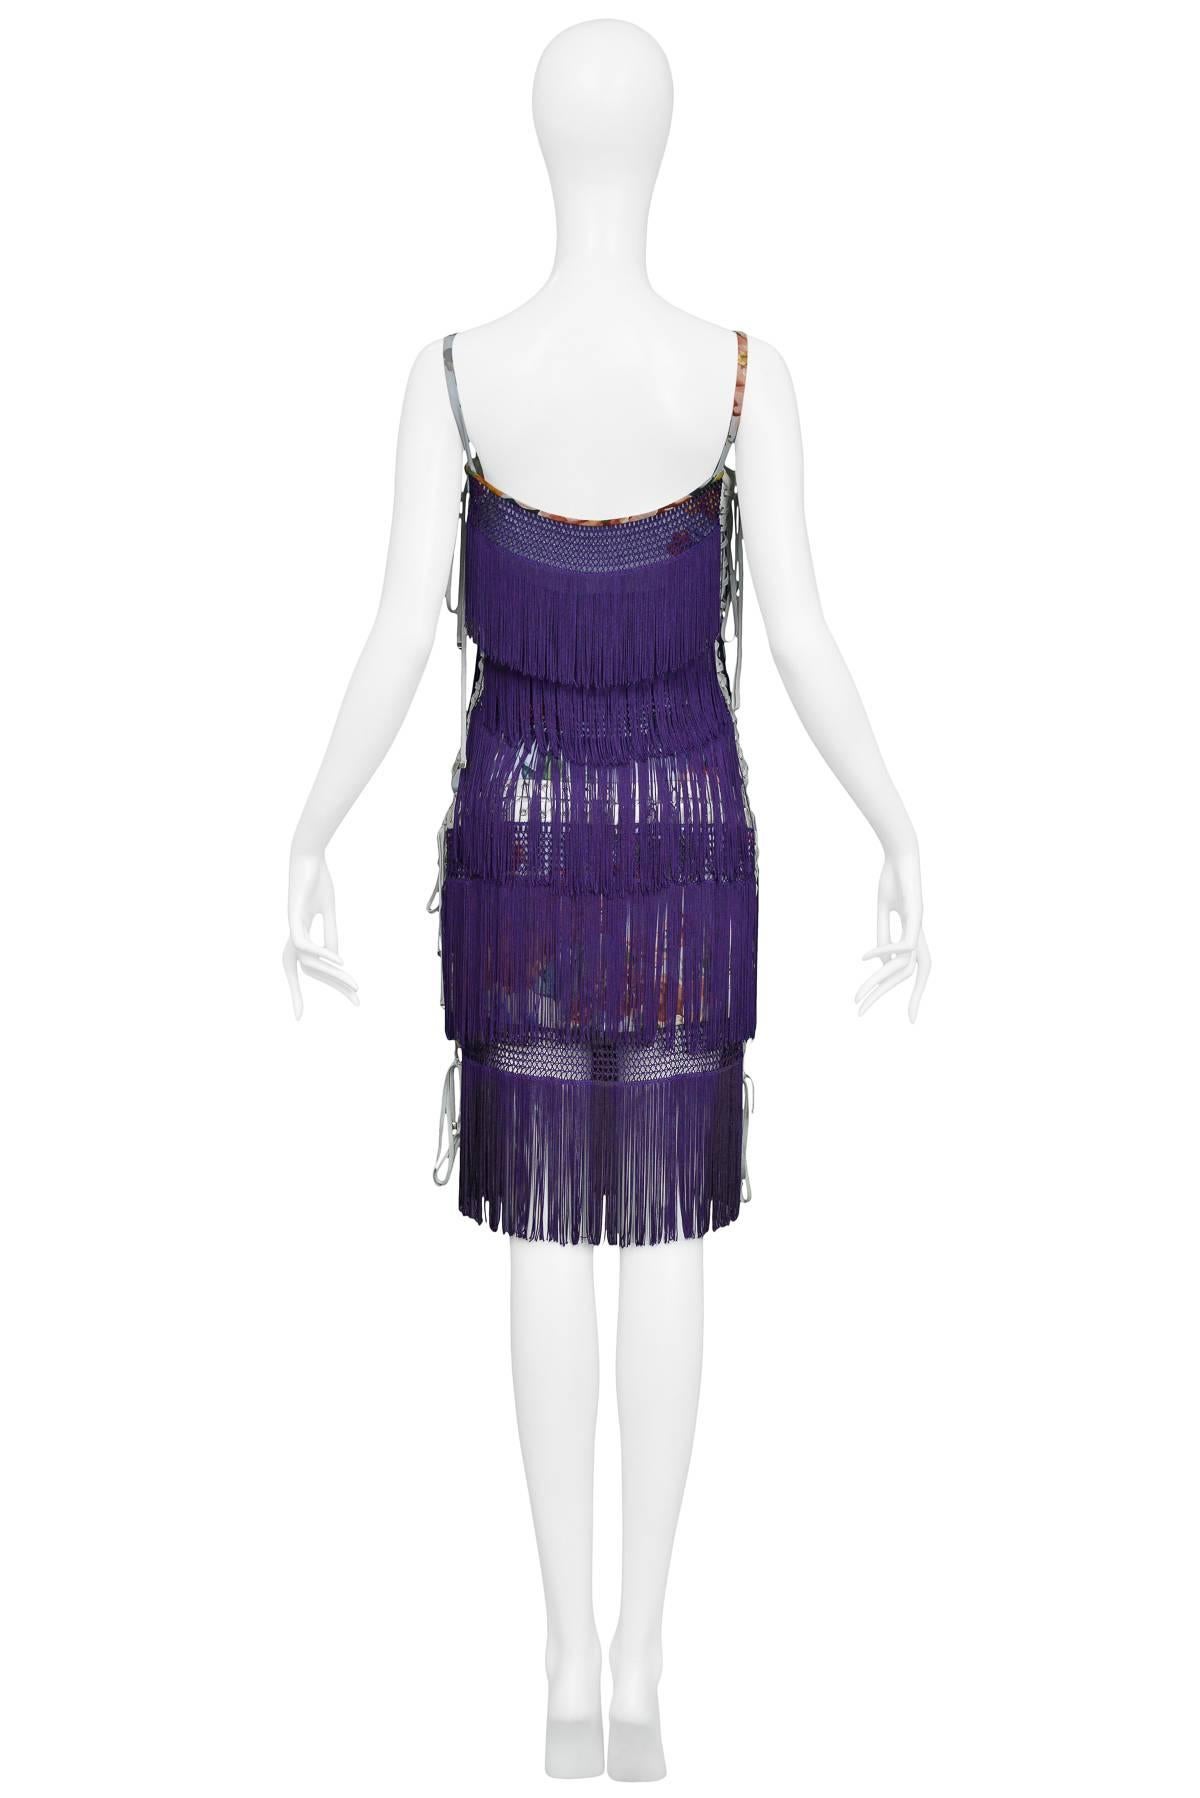 Women's Dolce & Gabbana Purple Fringe and Floral Corset Runway Dress 2003 